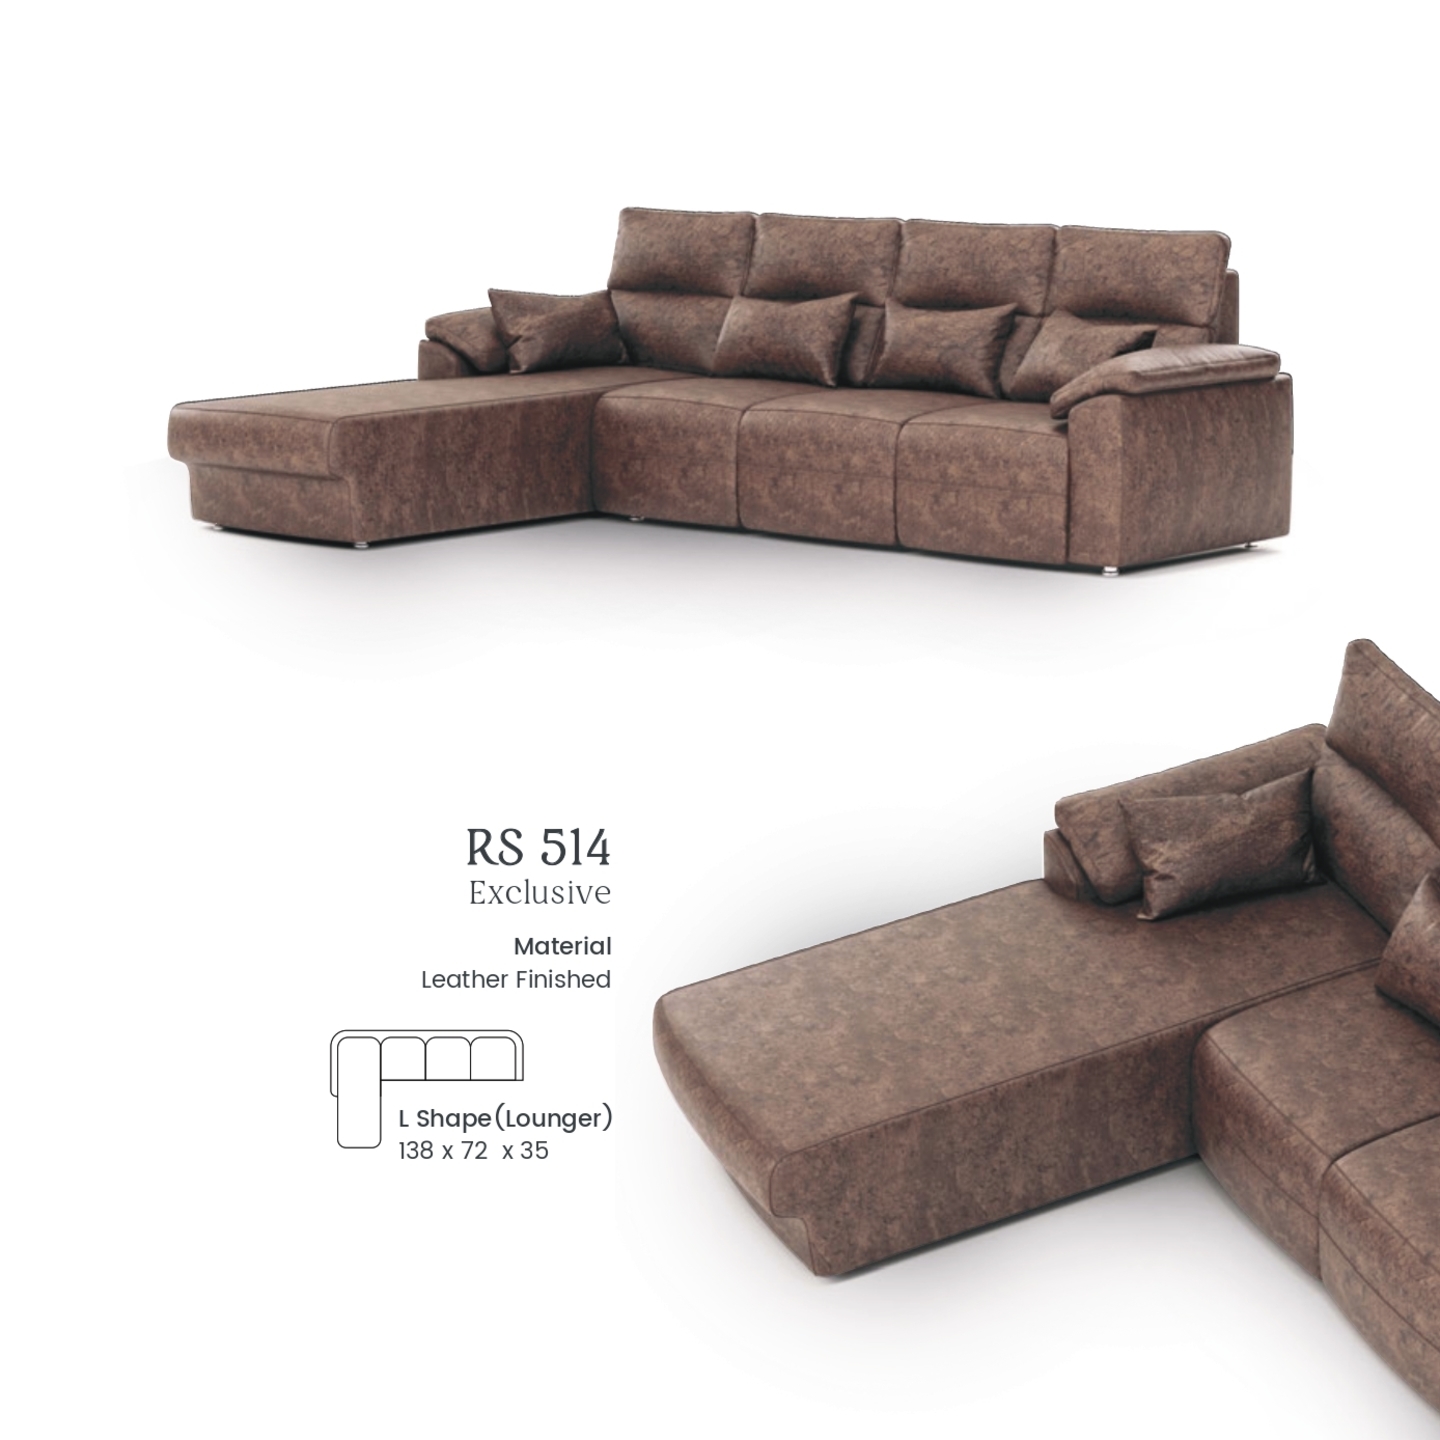 RLF Corner Sofa Set DD-514 Lounger In Brown Colour